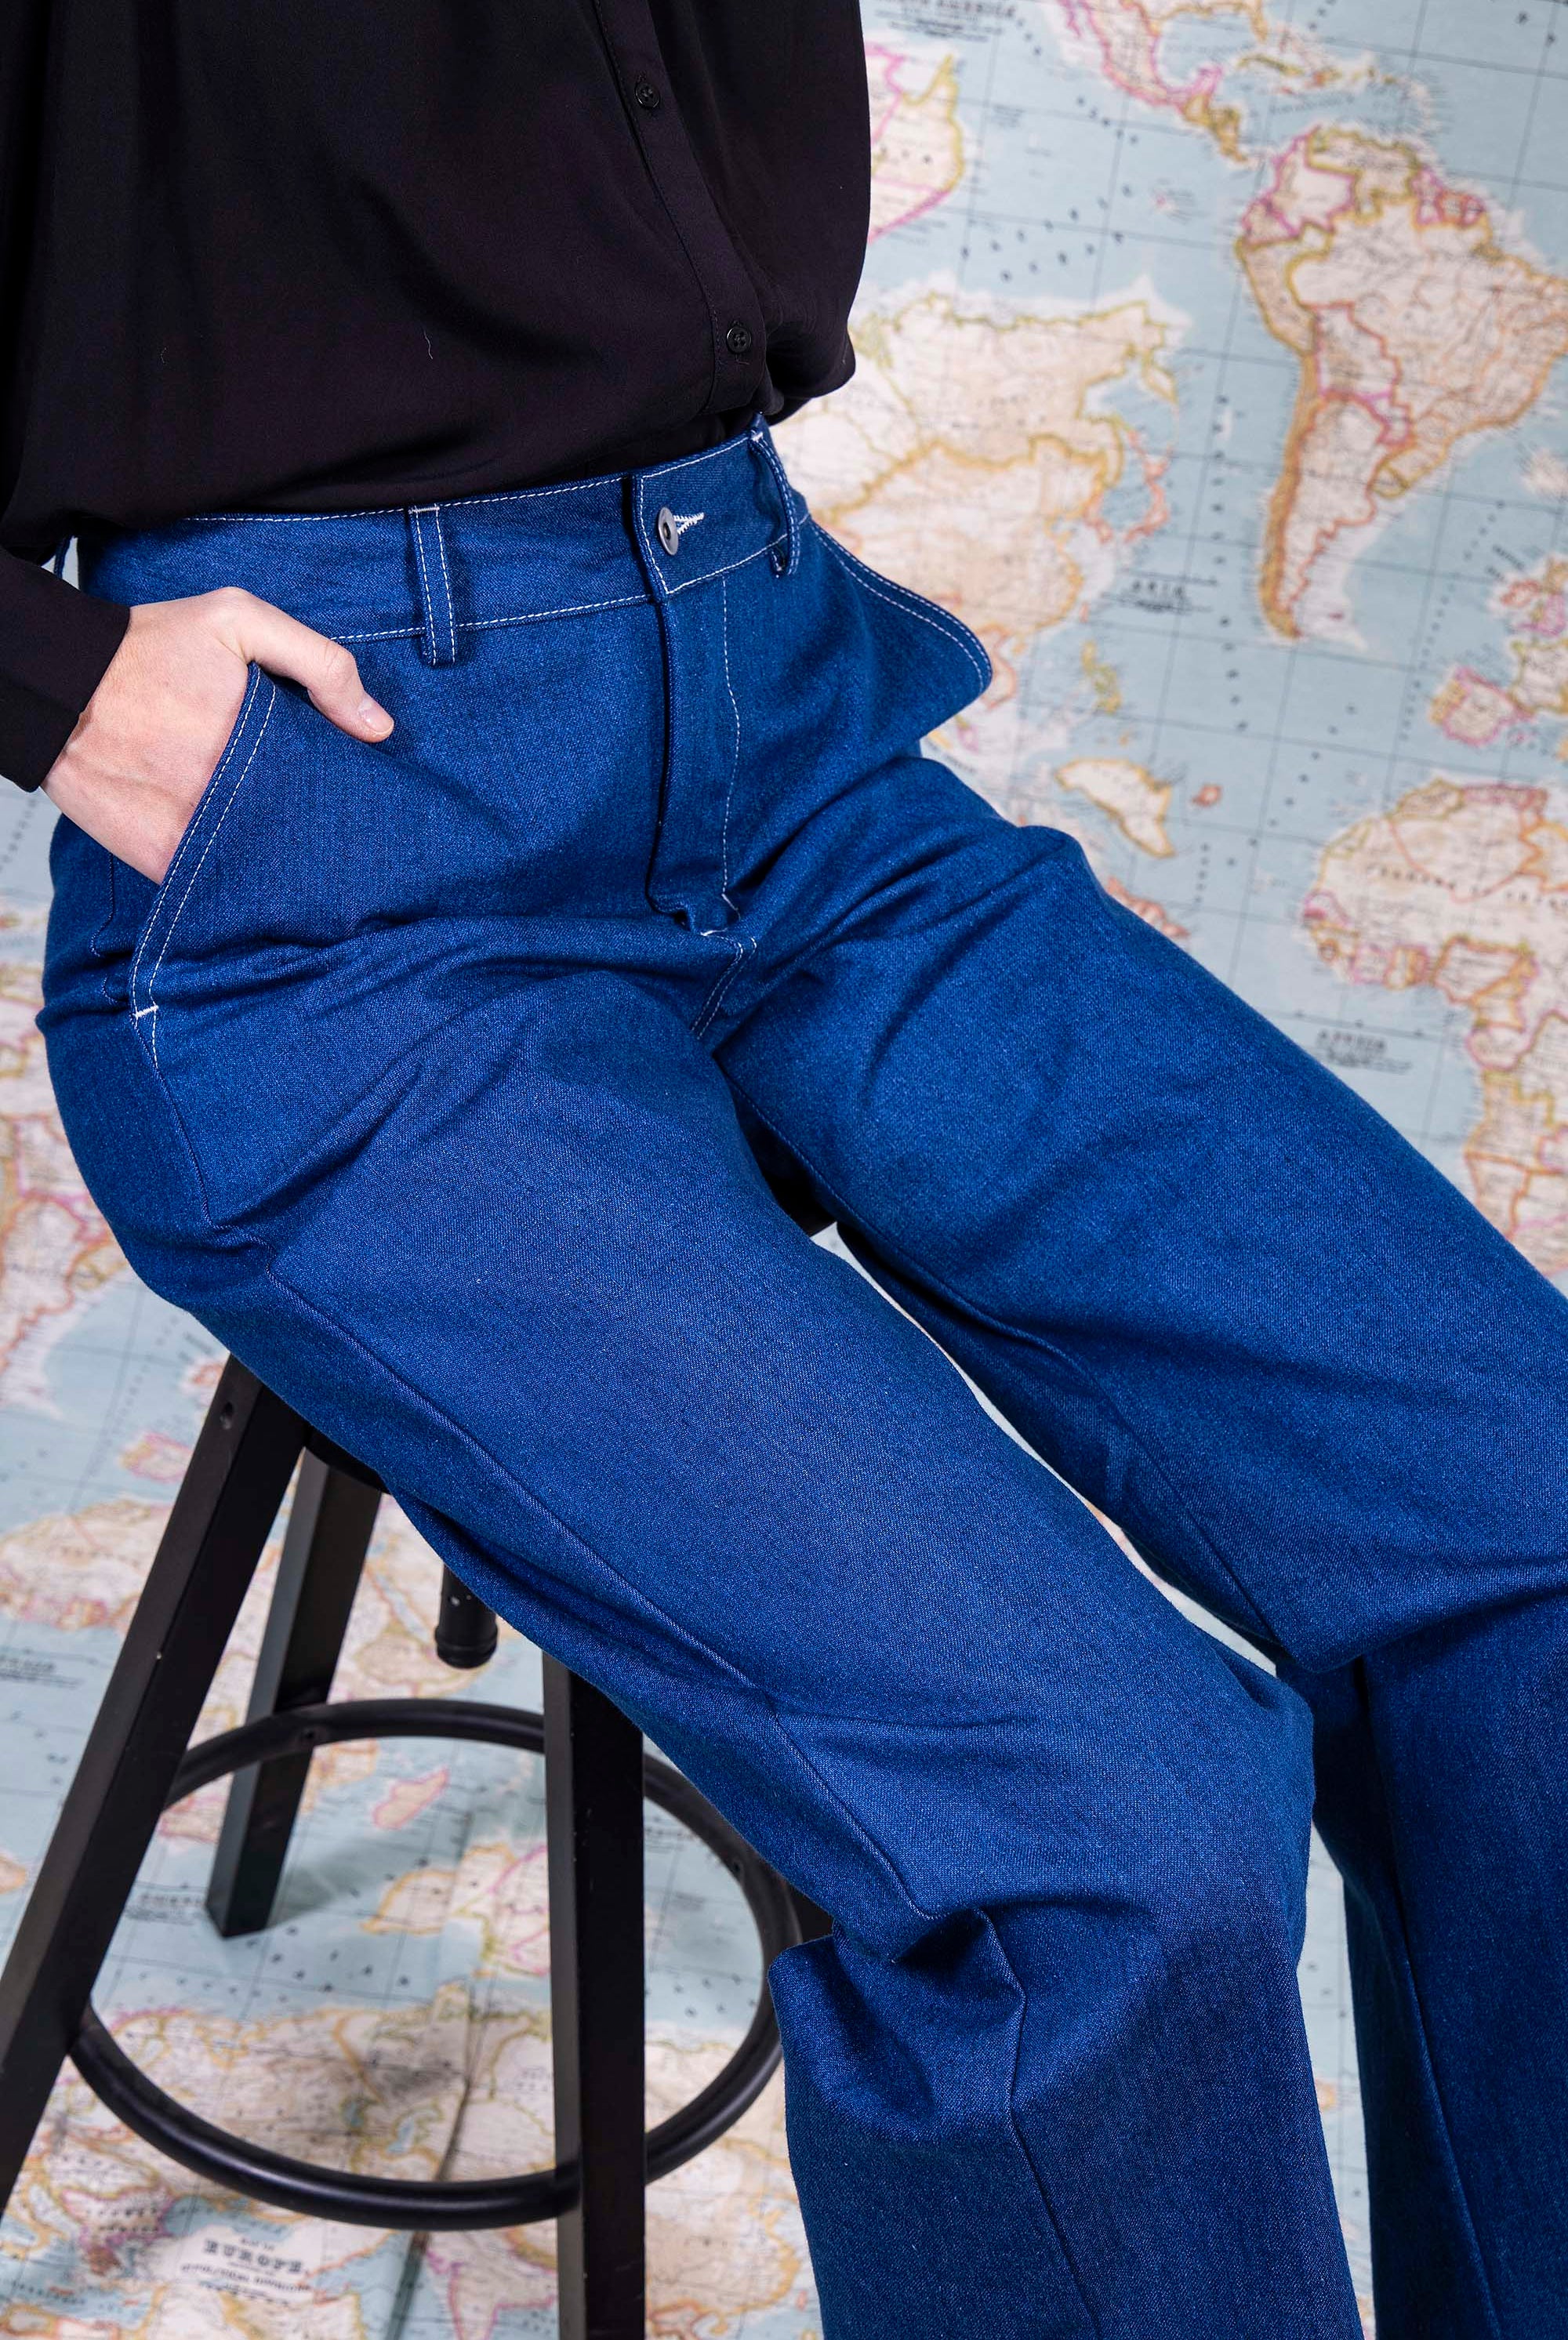 Pantalon Tea Bleu Denim tendance masculin féminin, indispensable du quotidien